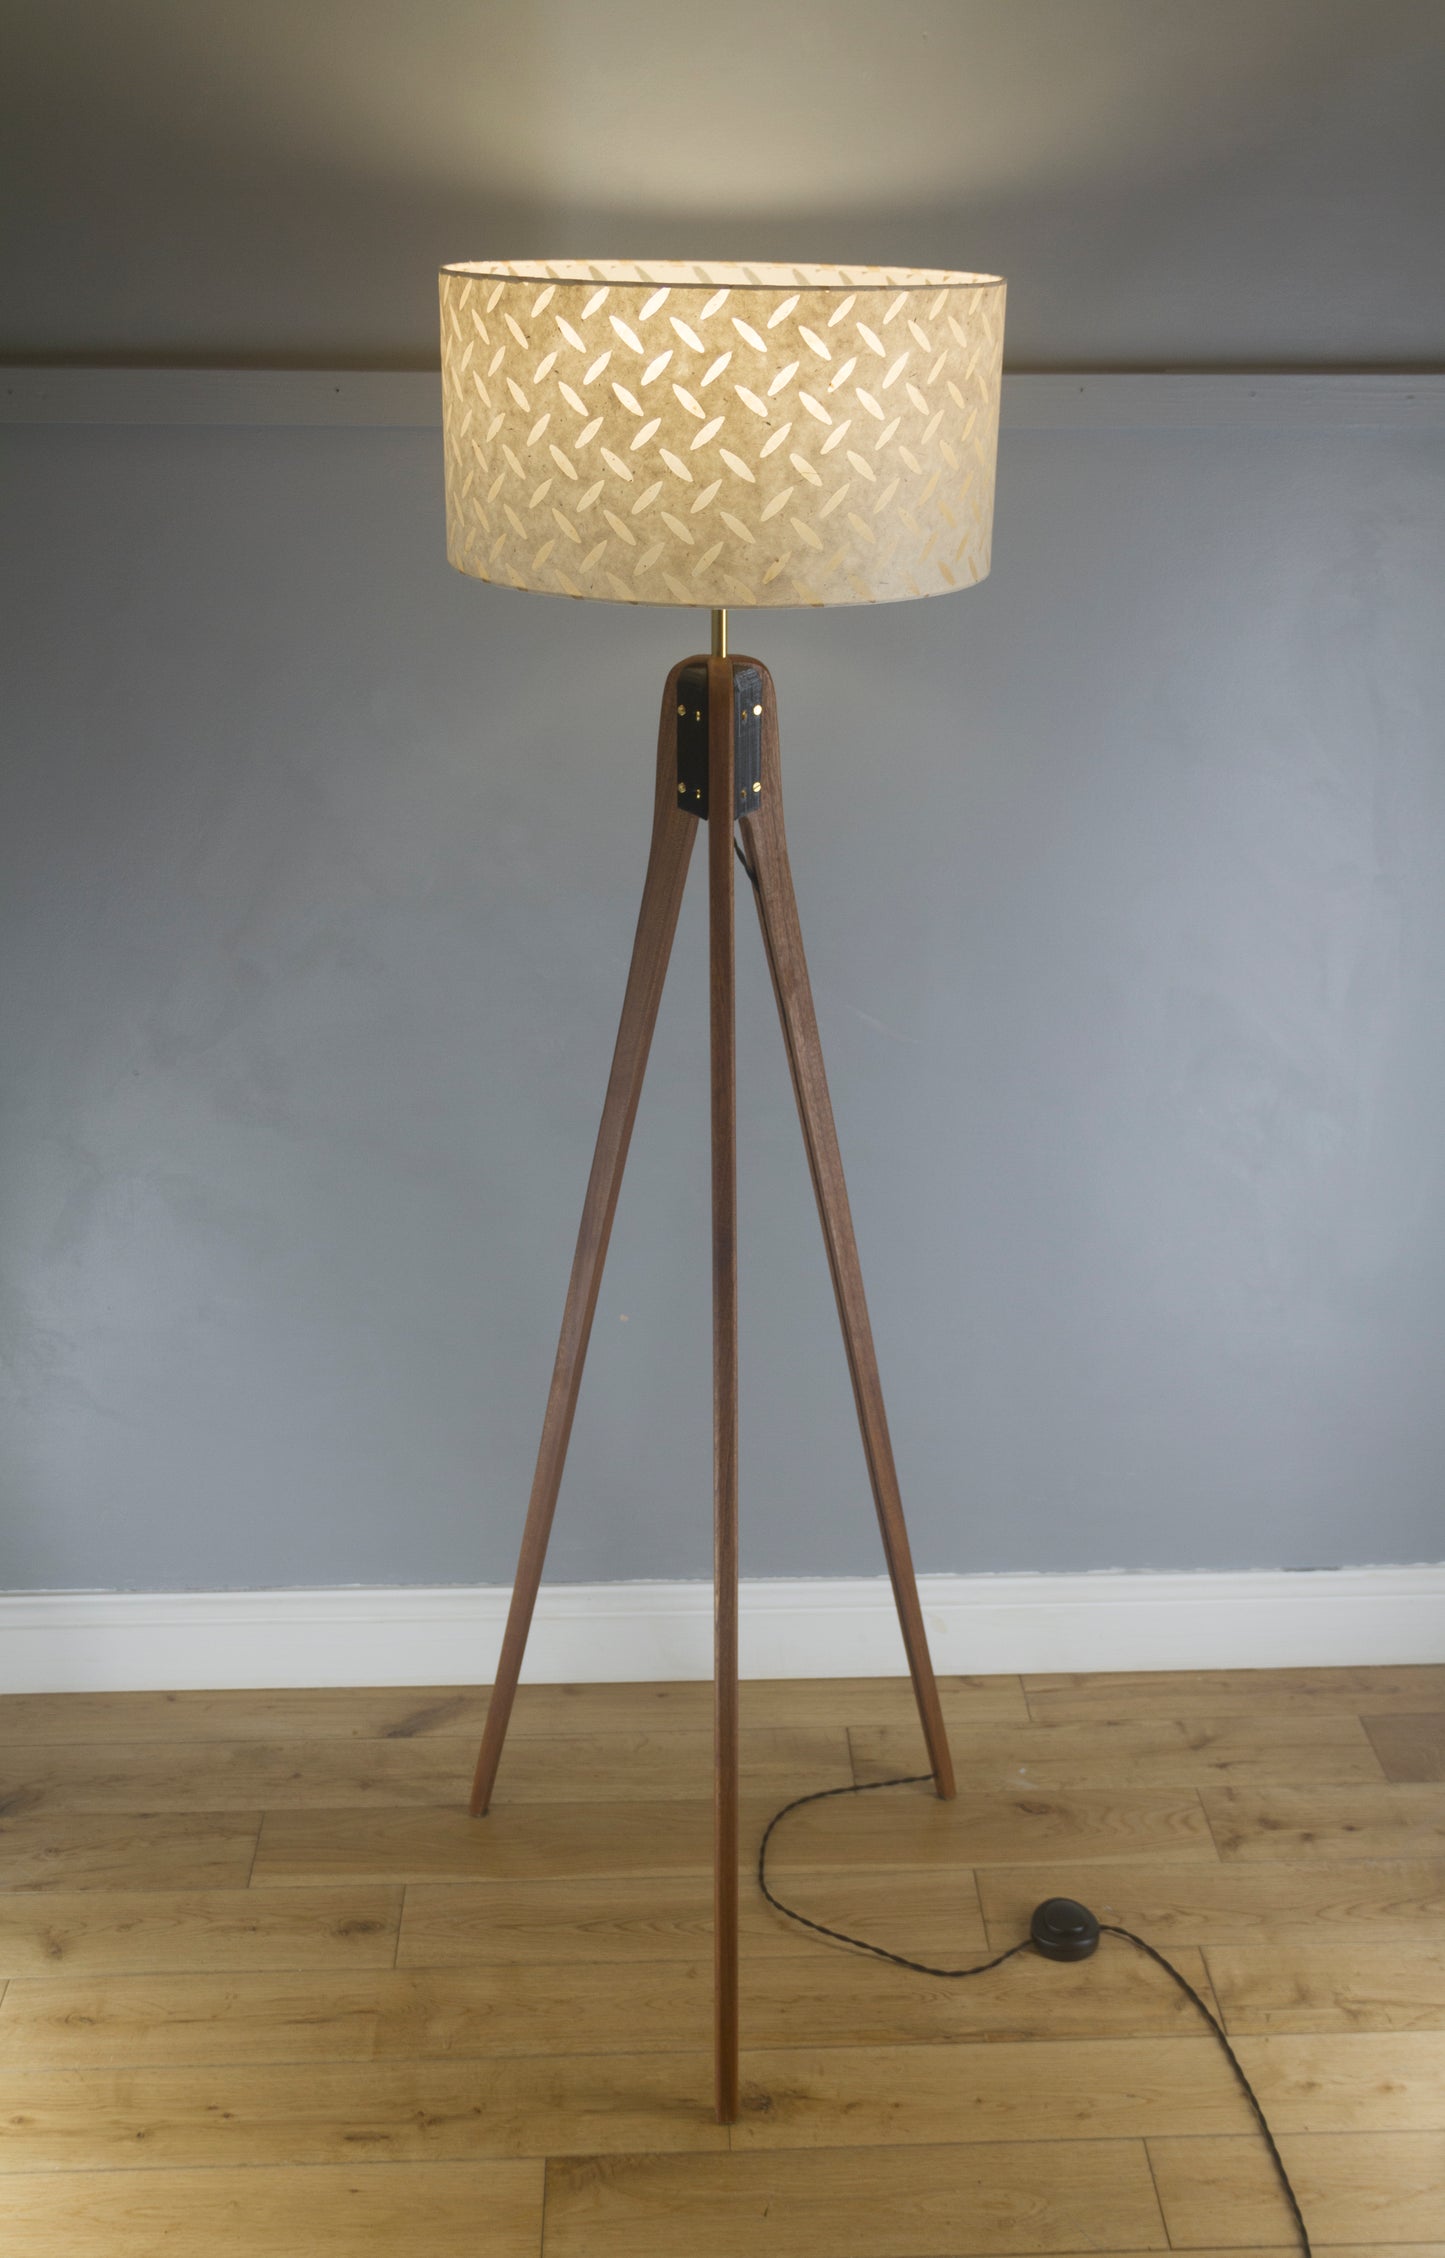 Sapele Tripod Floor Lamp - P10 - Batik Tread Plate Natural